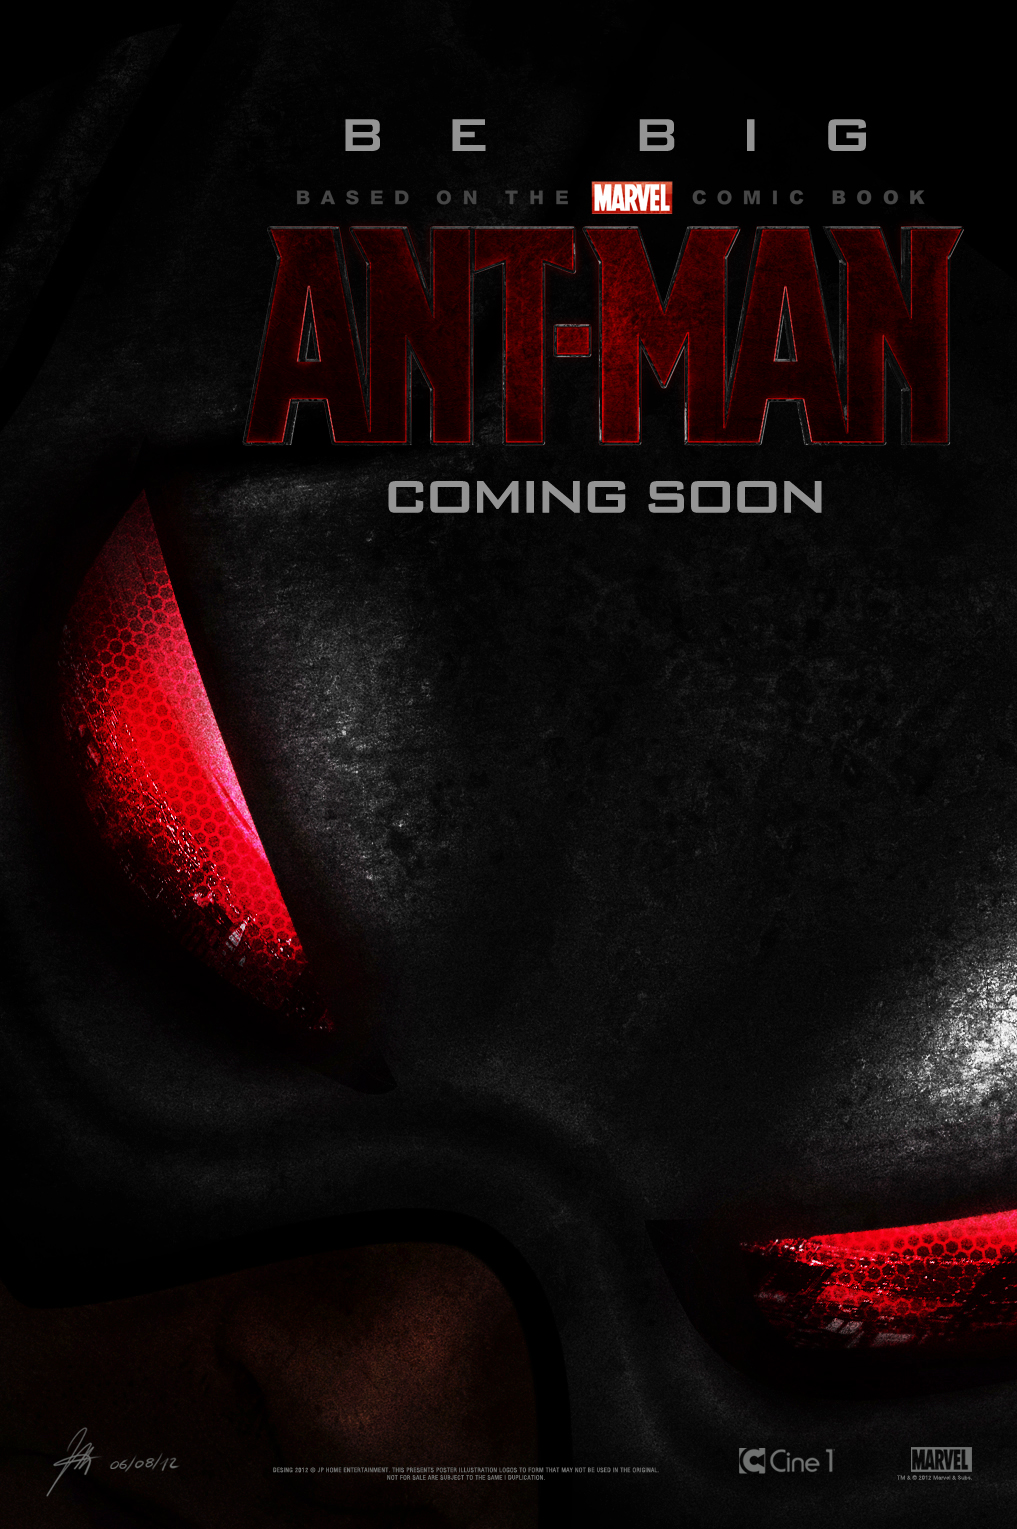 http://themovieblog.com/wp-content/uploads/2012/09/Ant-Man-Poster.jpeg